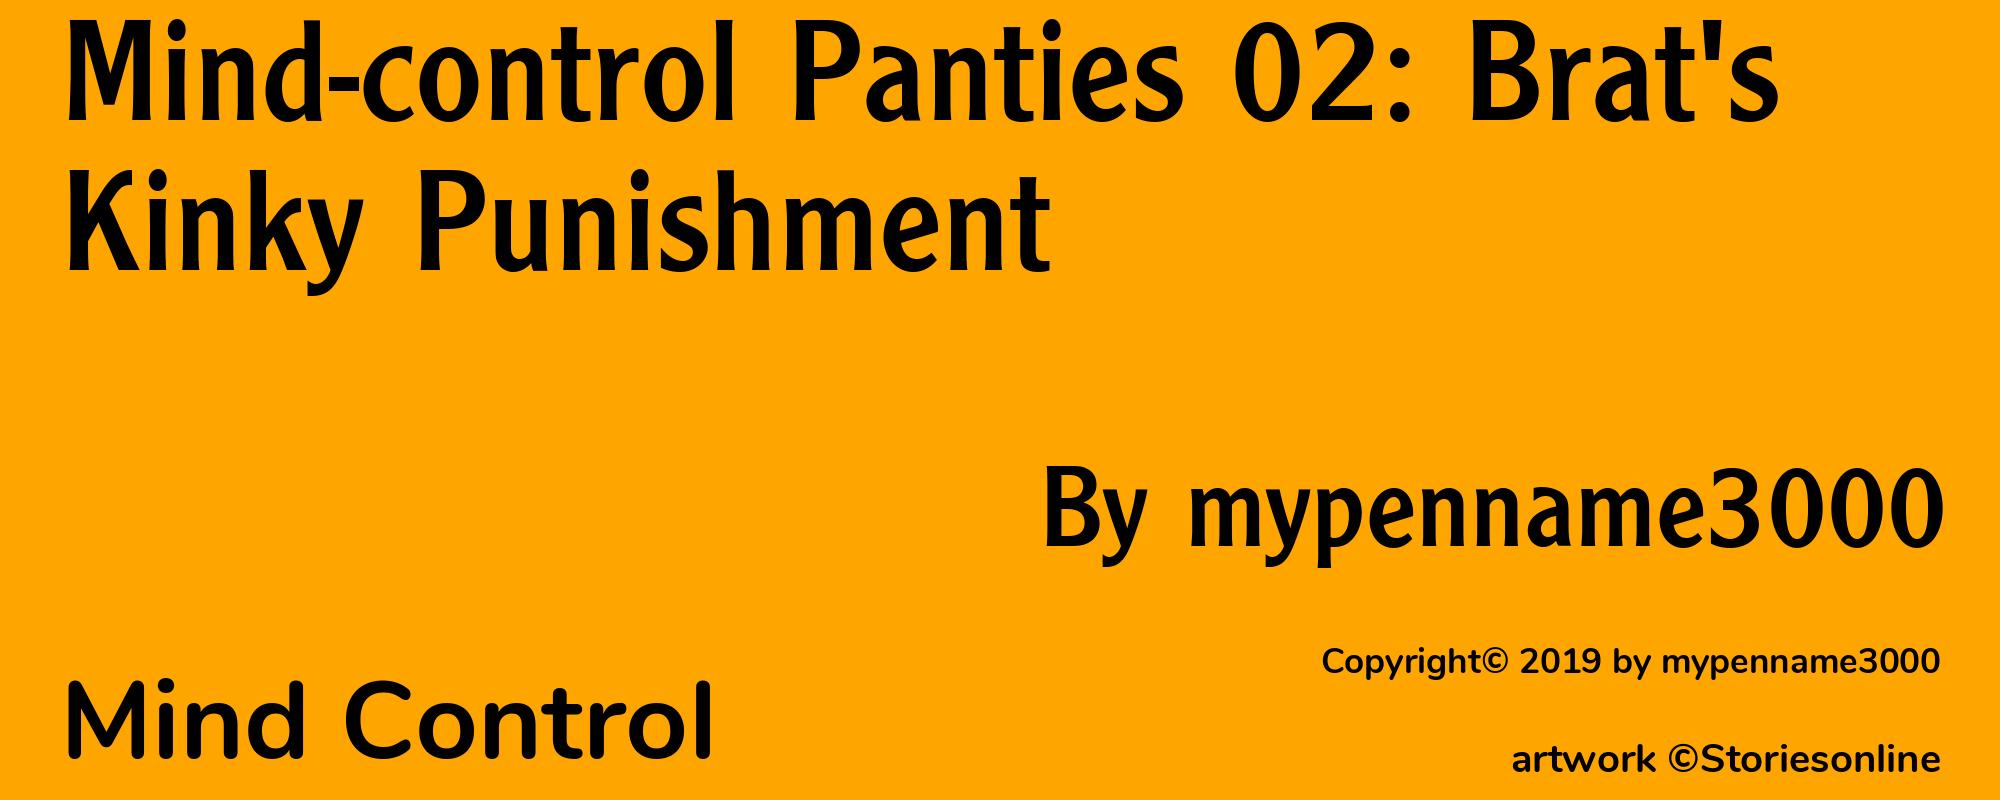 Mind-control Panties 02: Brat's Kinky Punishment - Cover